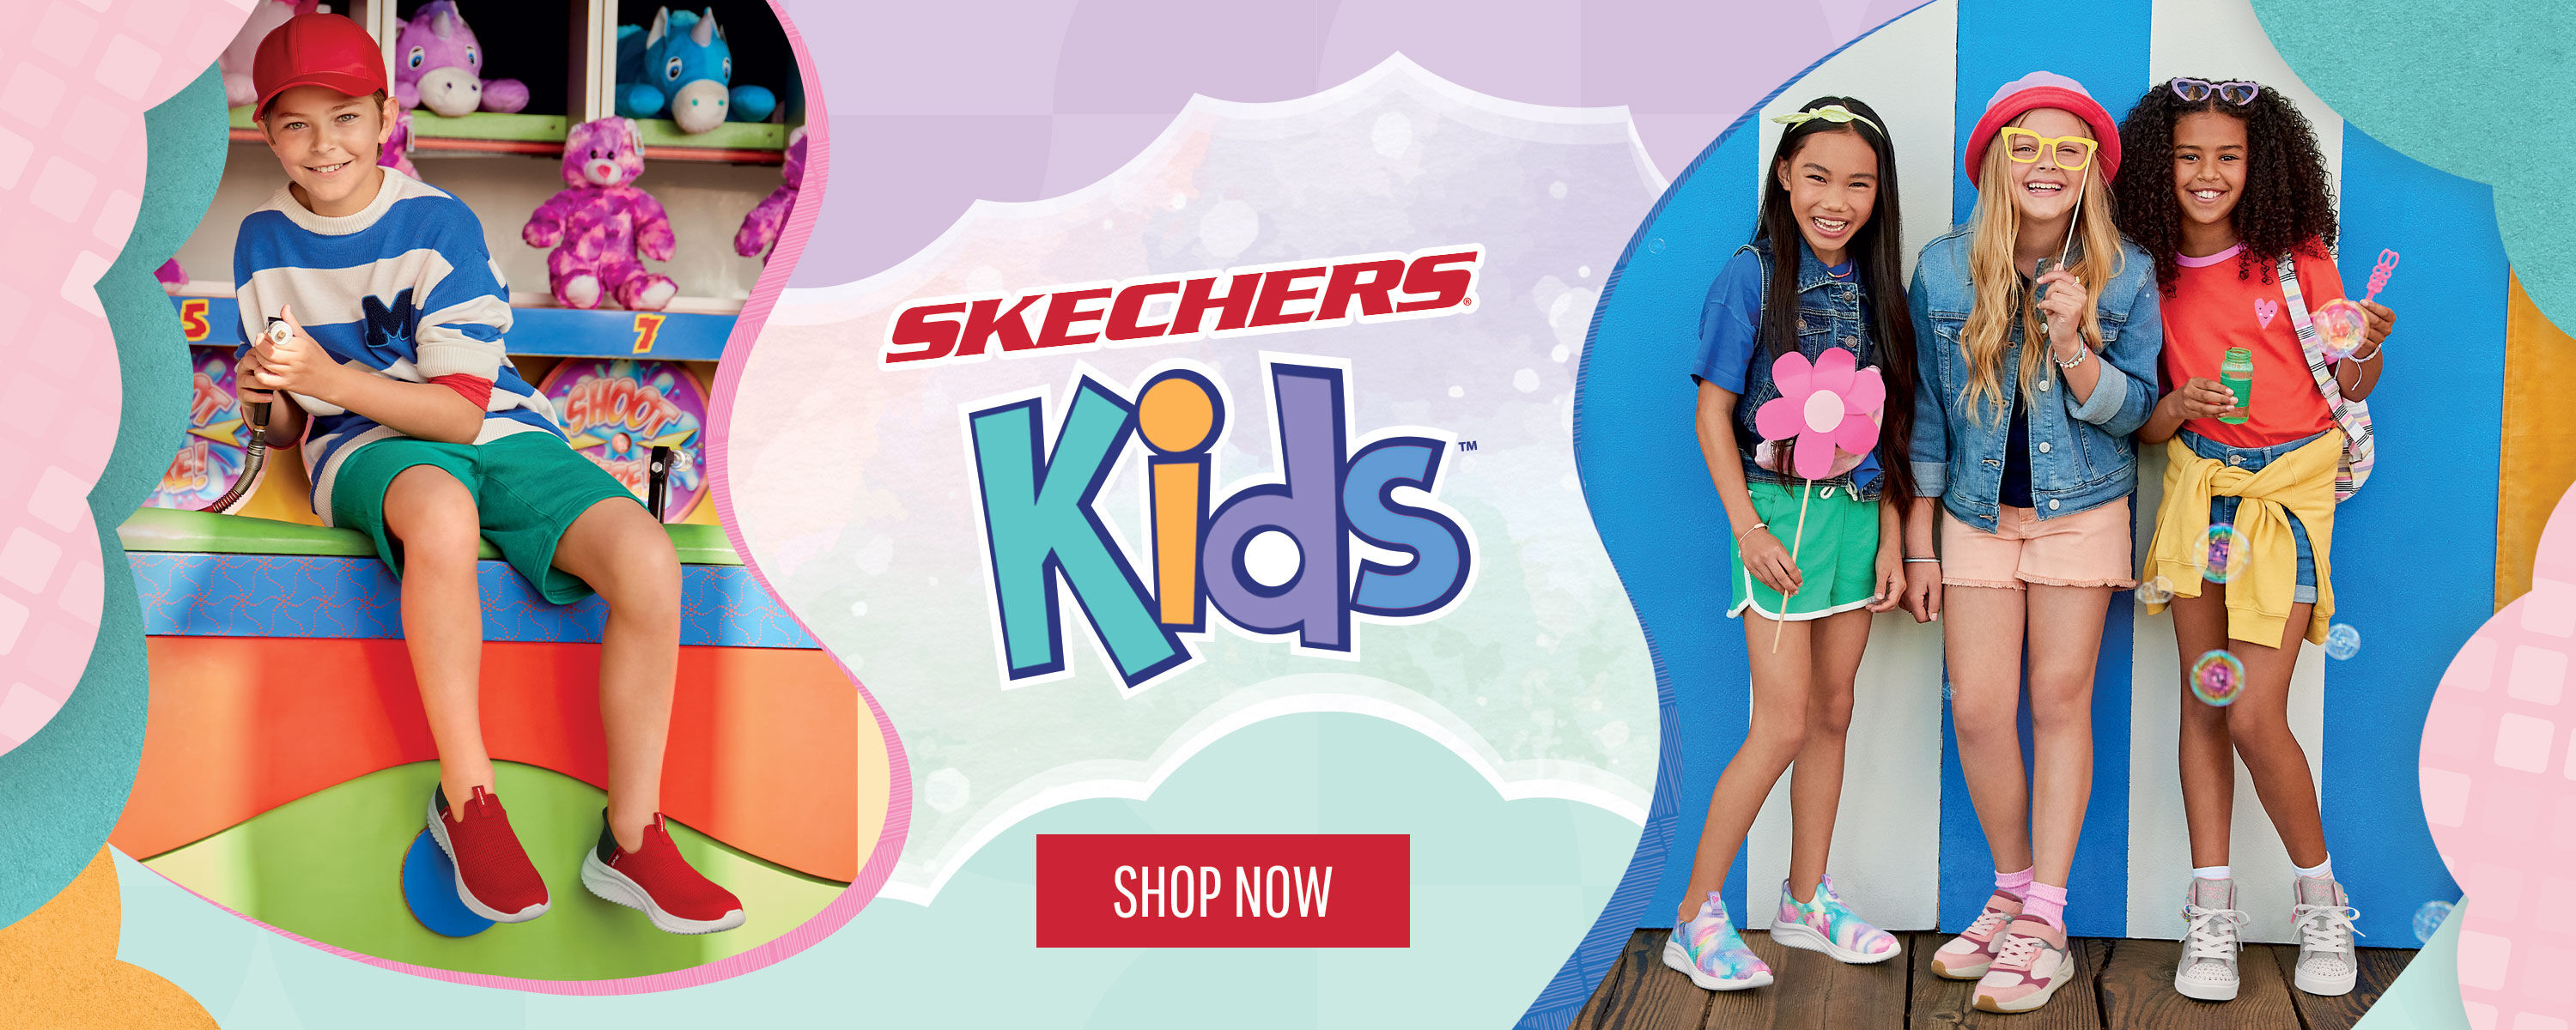 Skechers Kids - SHOP NOW